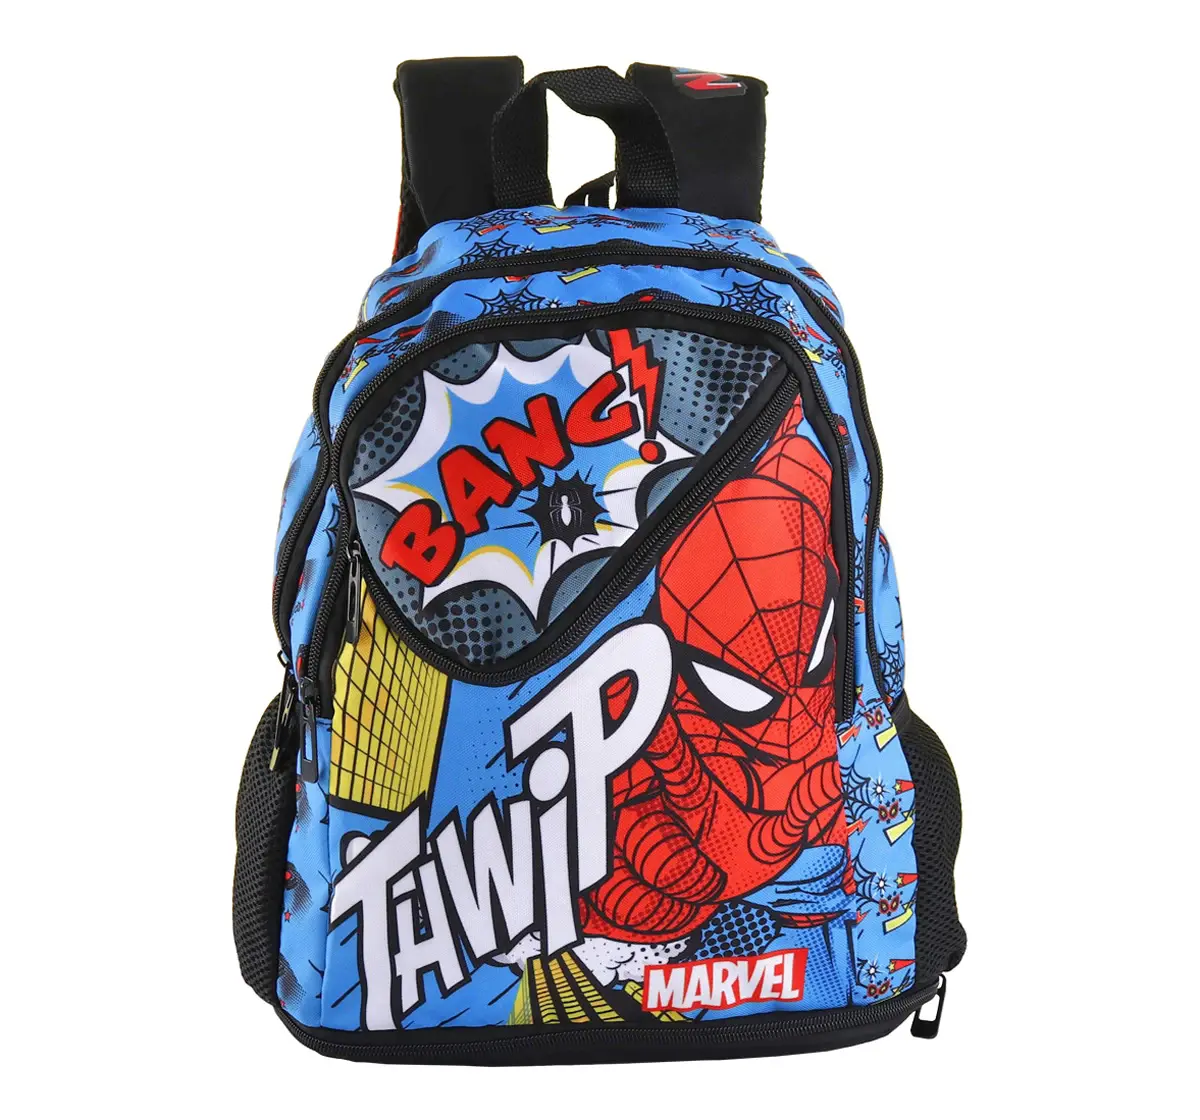 Spider-Man Kids School Backpack Bags For Boys & Girls